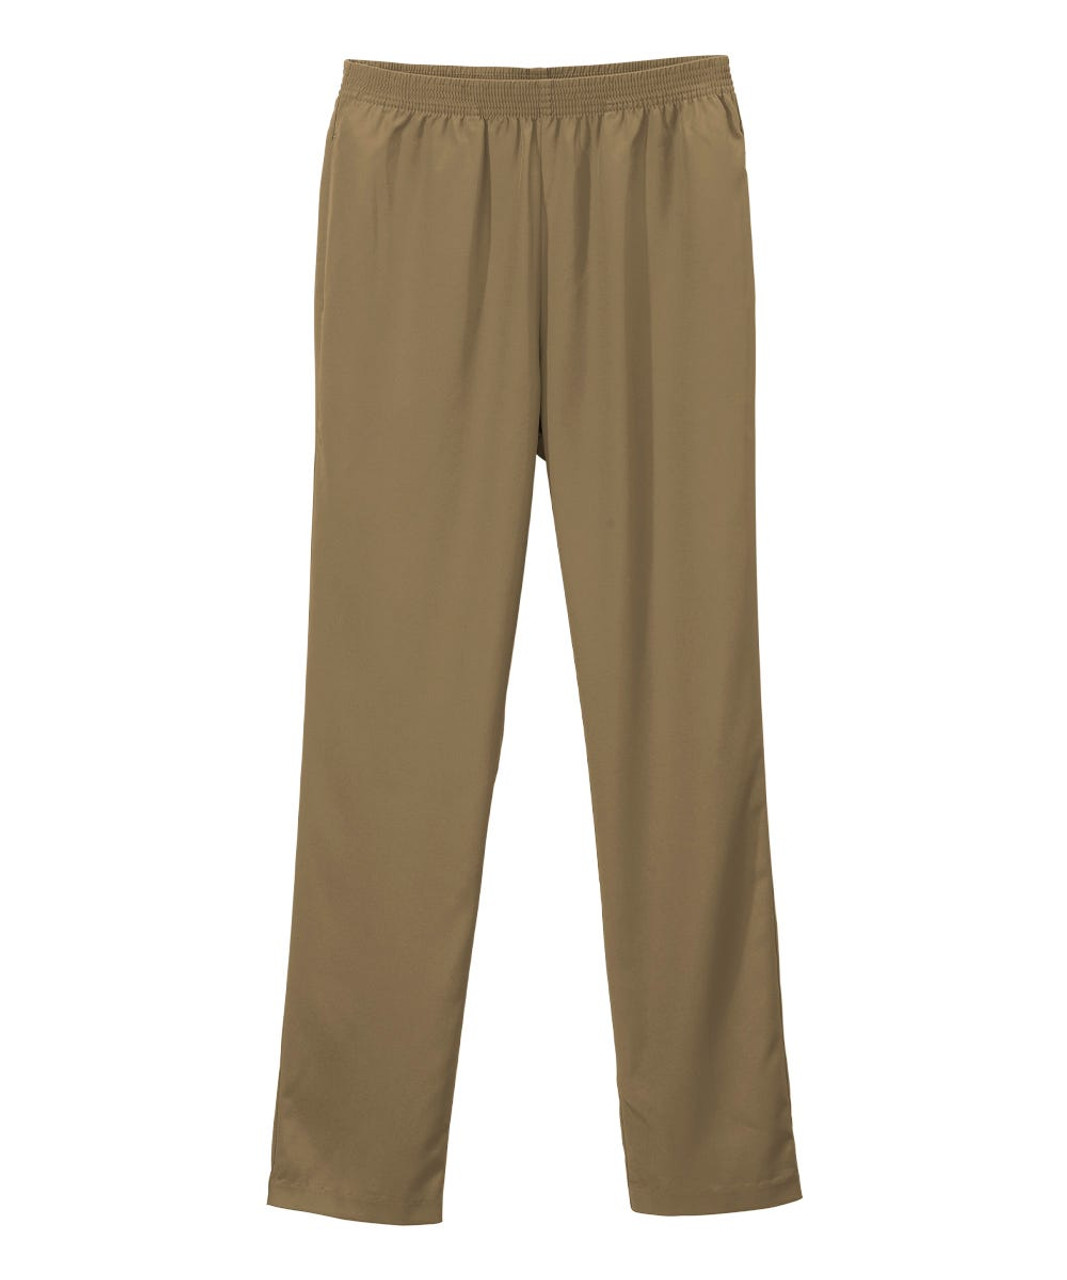 Silverts SV13100 Women's Pull On Pants - Senior Women's Pull-on Petite Gabardine Pant Taupe, Size=40P, SV13100-TAUW-40P